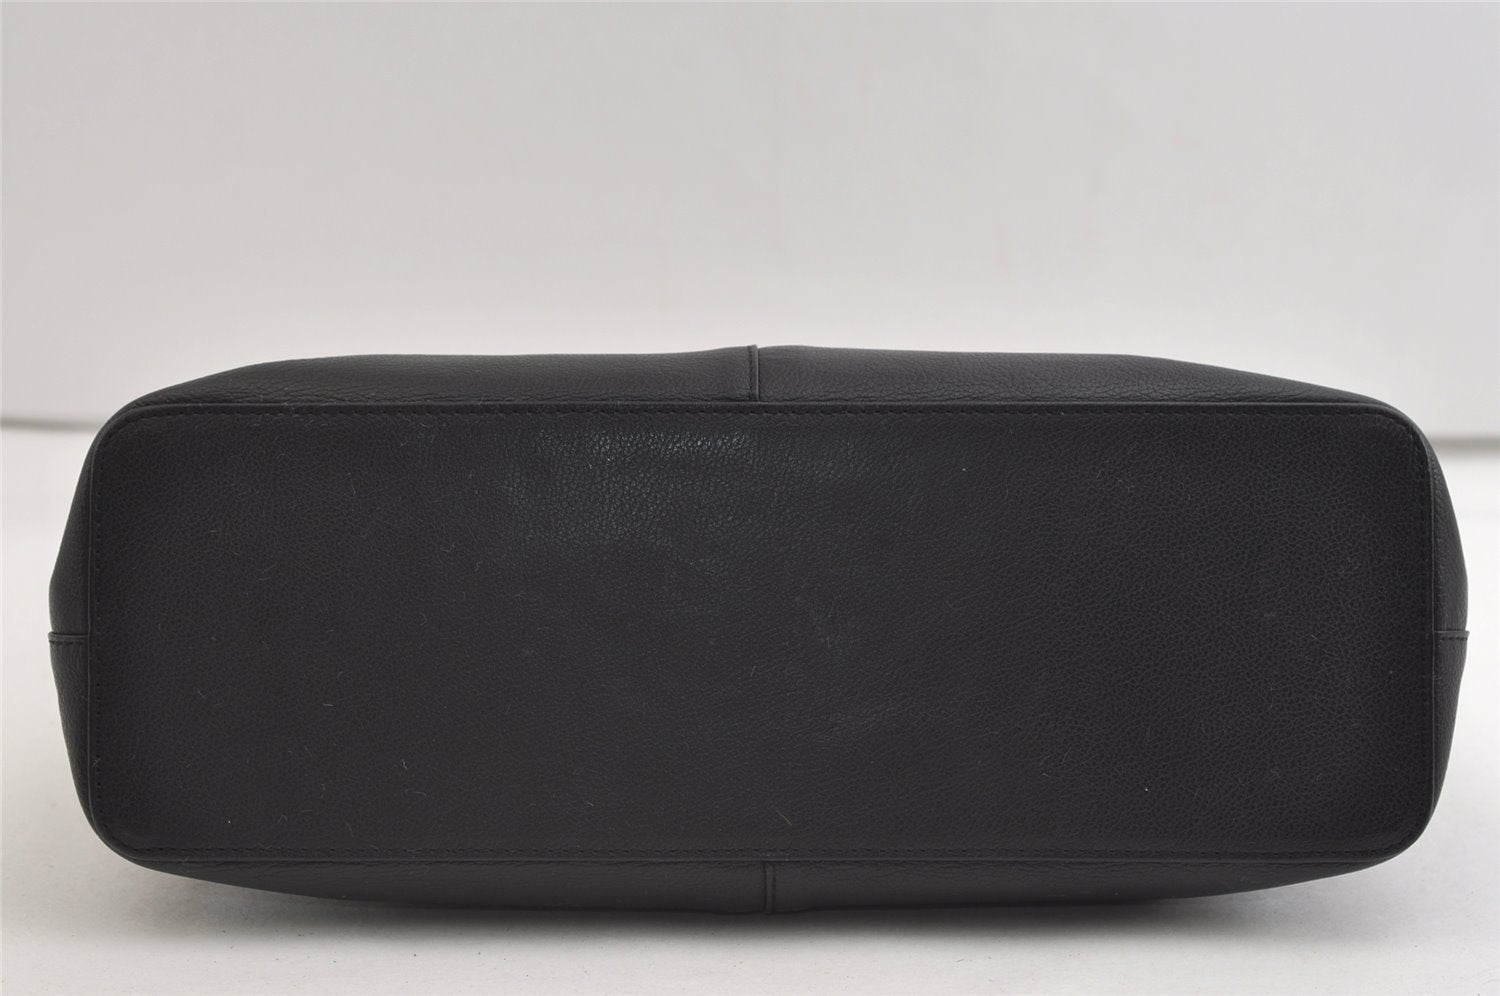 Authentic BURBERRY Vintage Leather Hand Bag Black 6826J